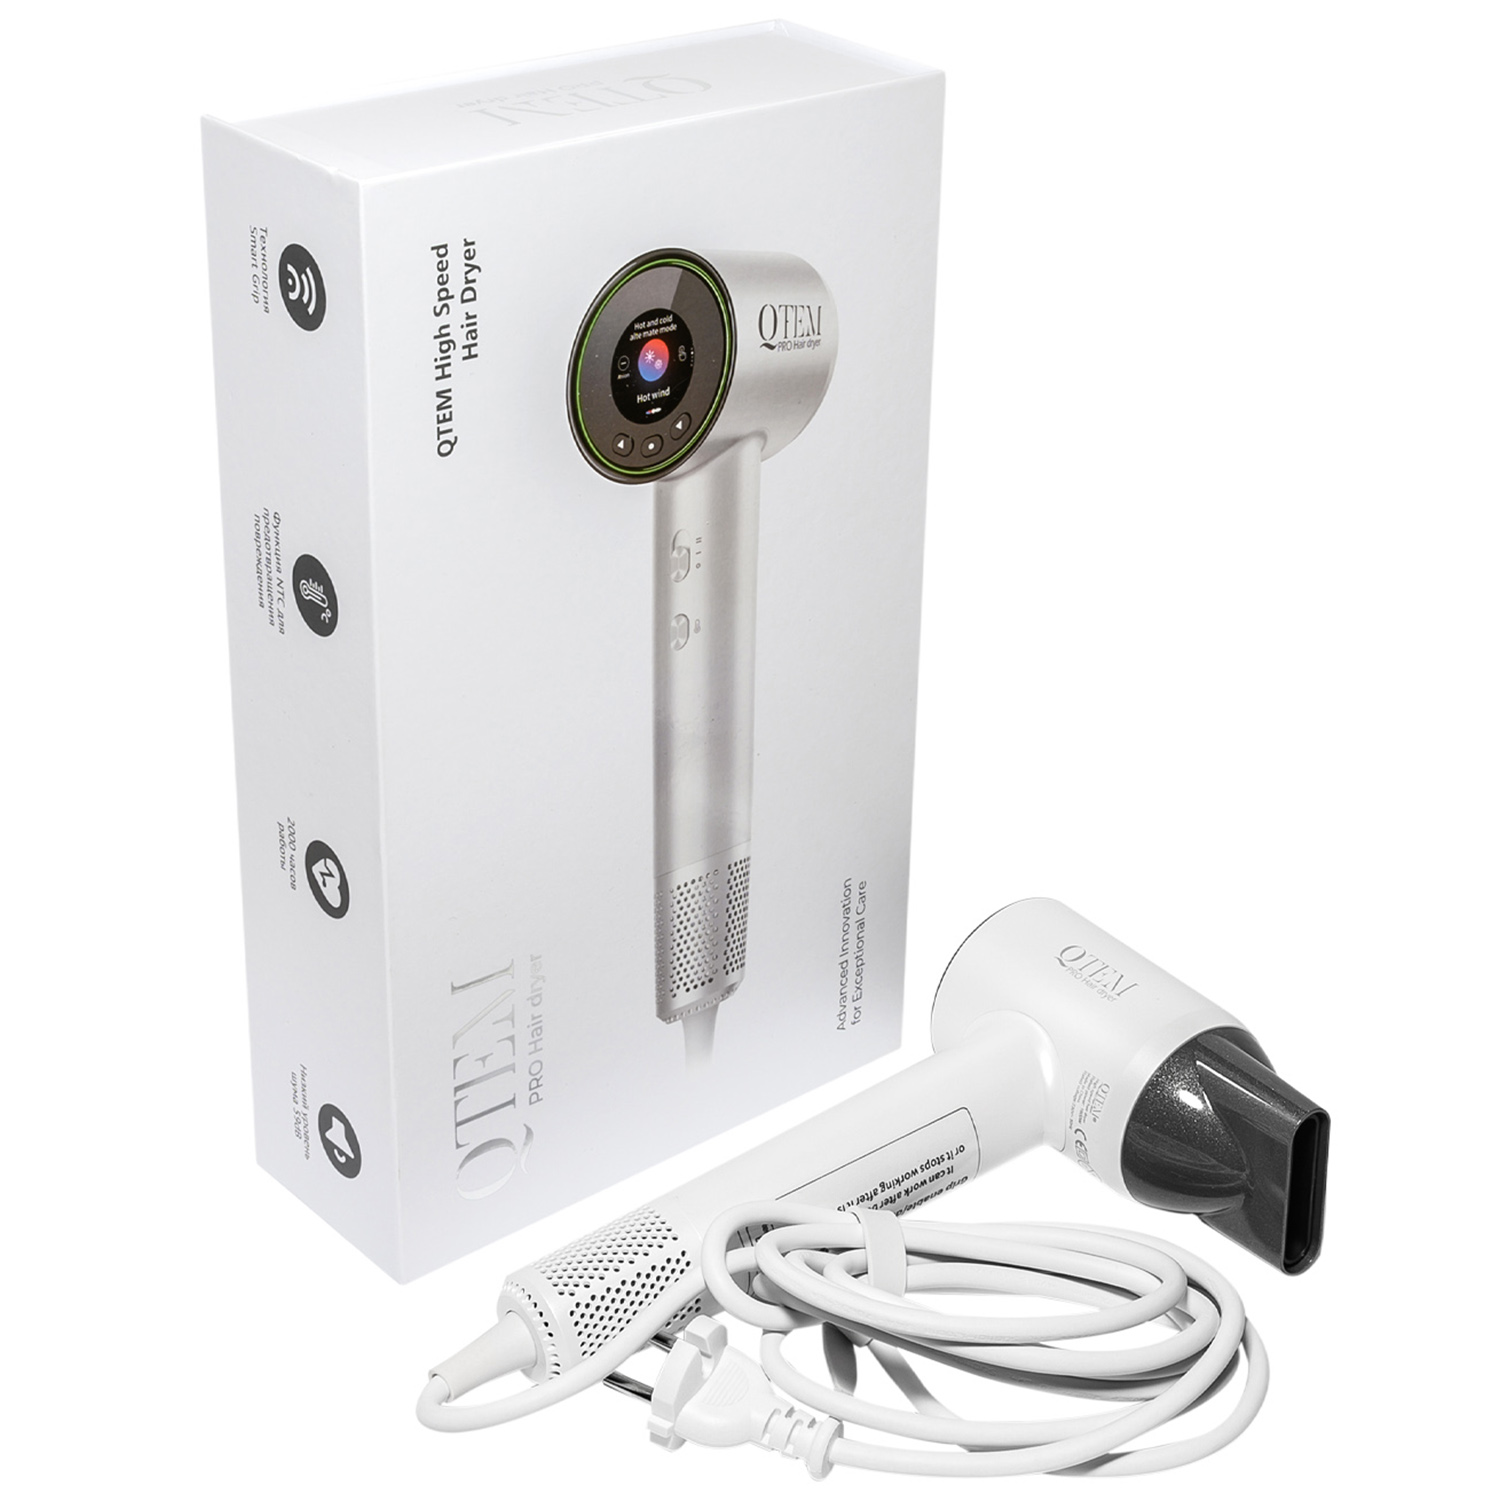 recording tools mcu 01 pro Qtem Фен Touch Sensing Hair Dryer, белый, 1 шт (Qtem, Pro Tools)